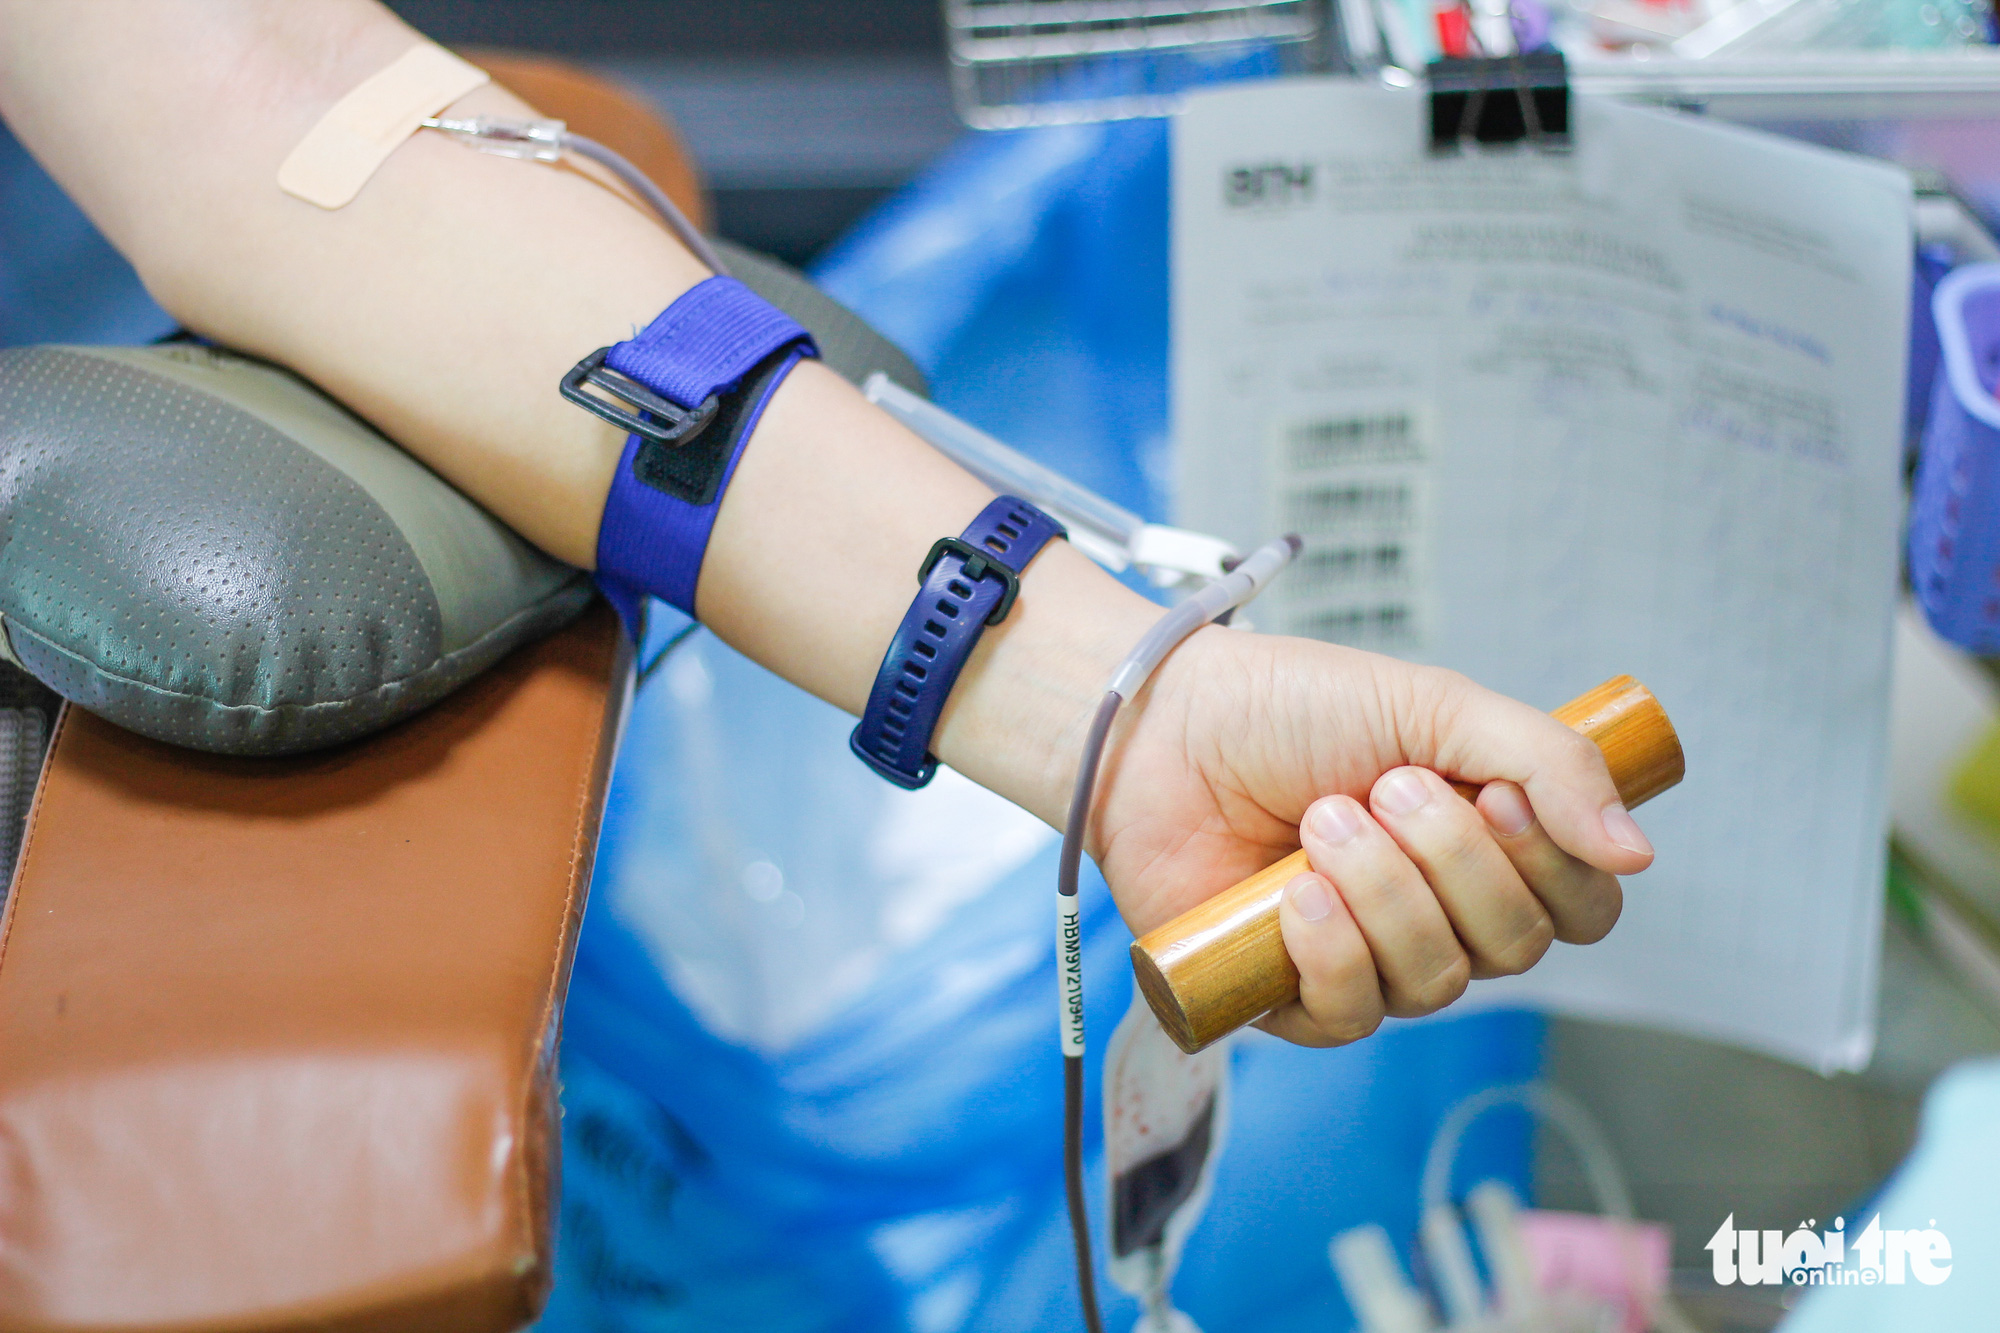 Saigon hospitals face severe blood shortage as donations postponed due to COVID-19 resurgence